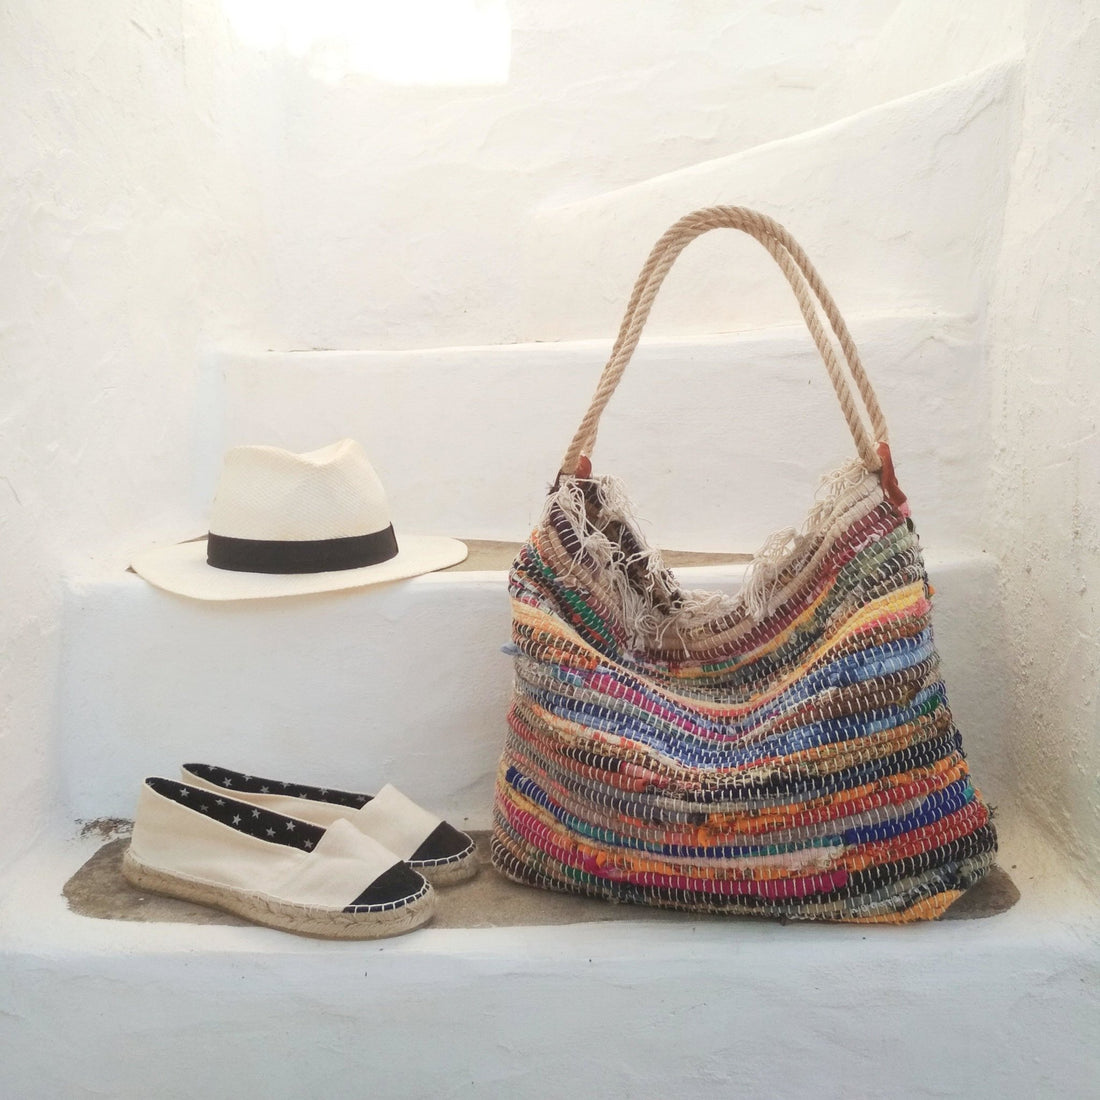 Your new summer bag awaits! - Maslinda Designs